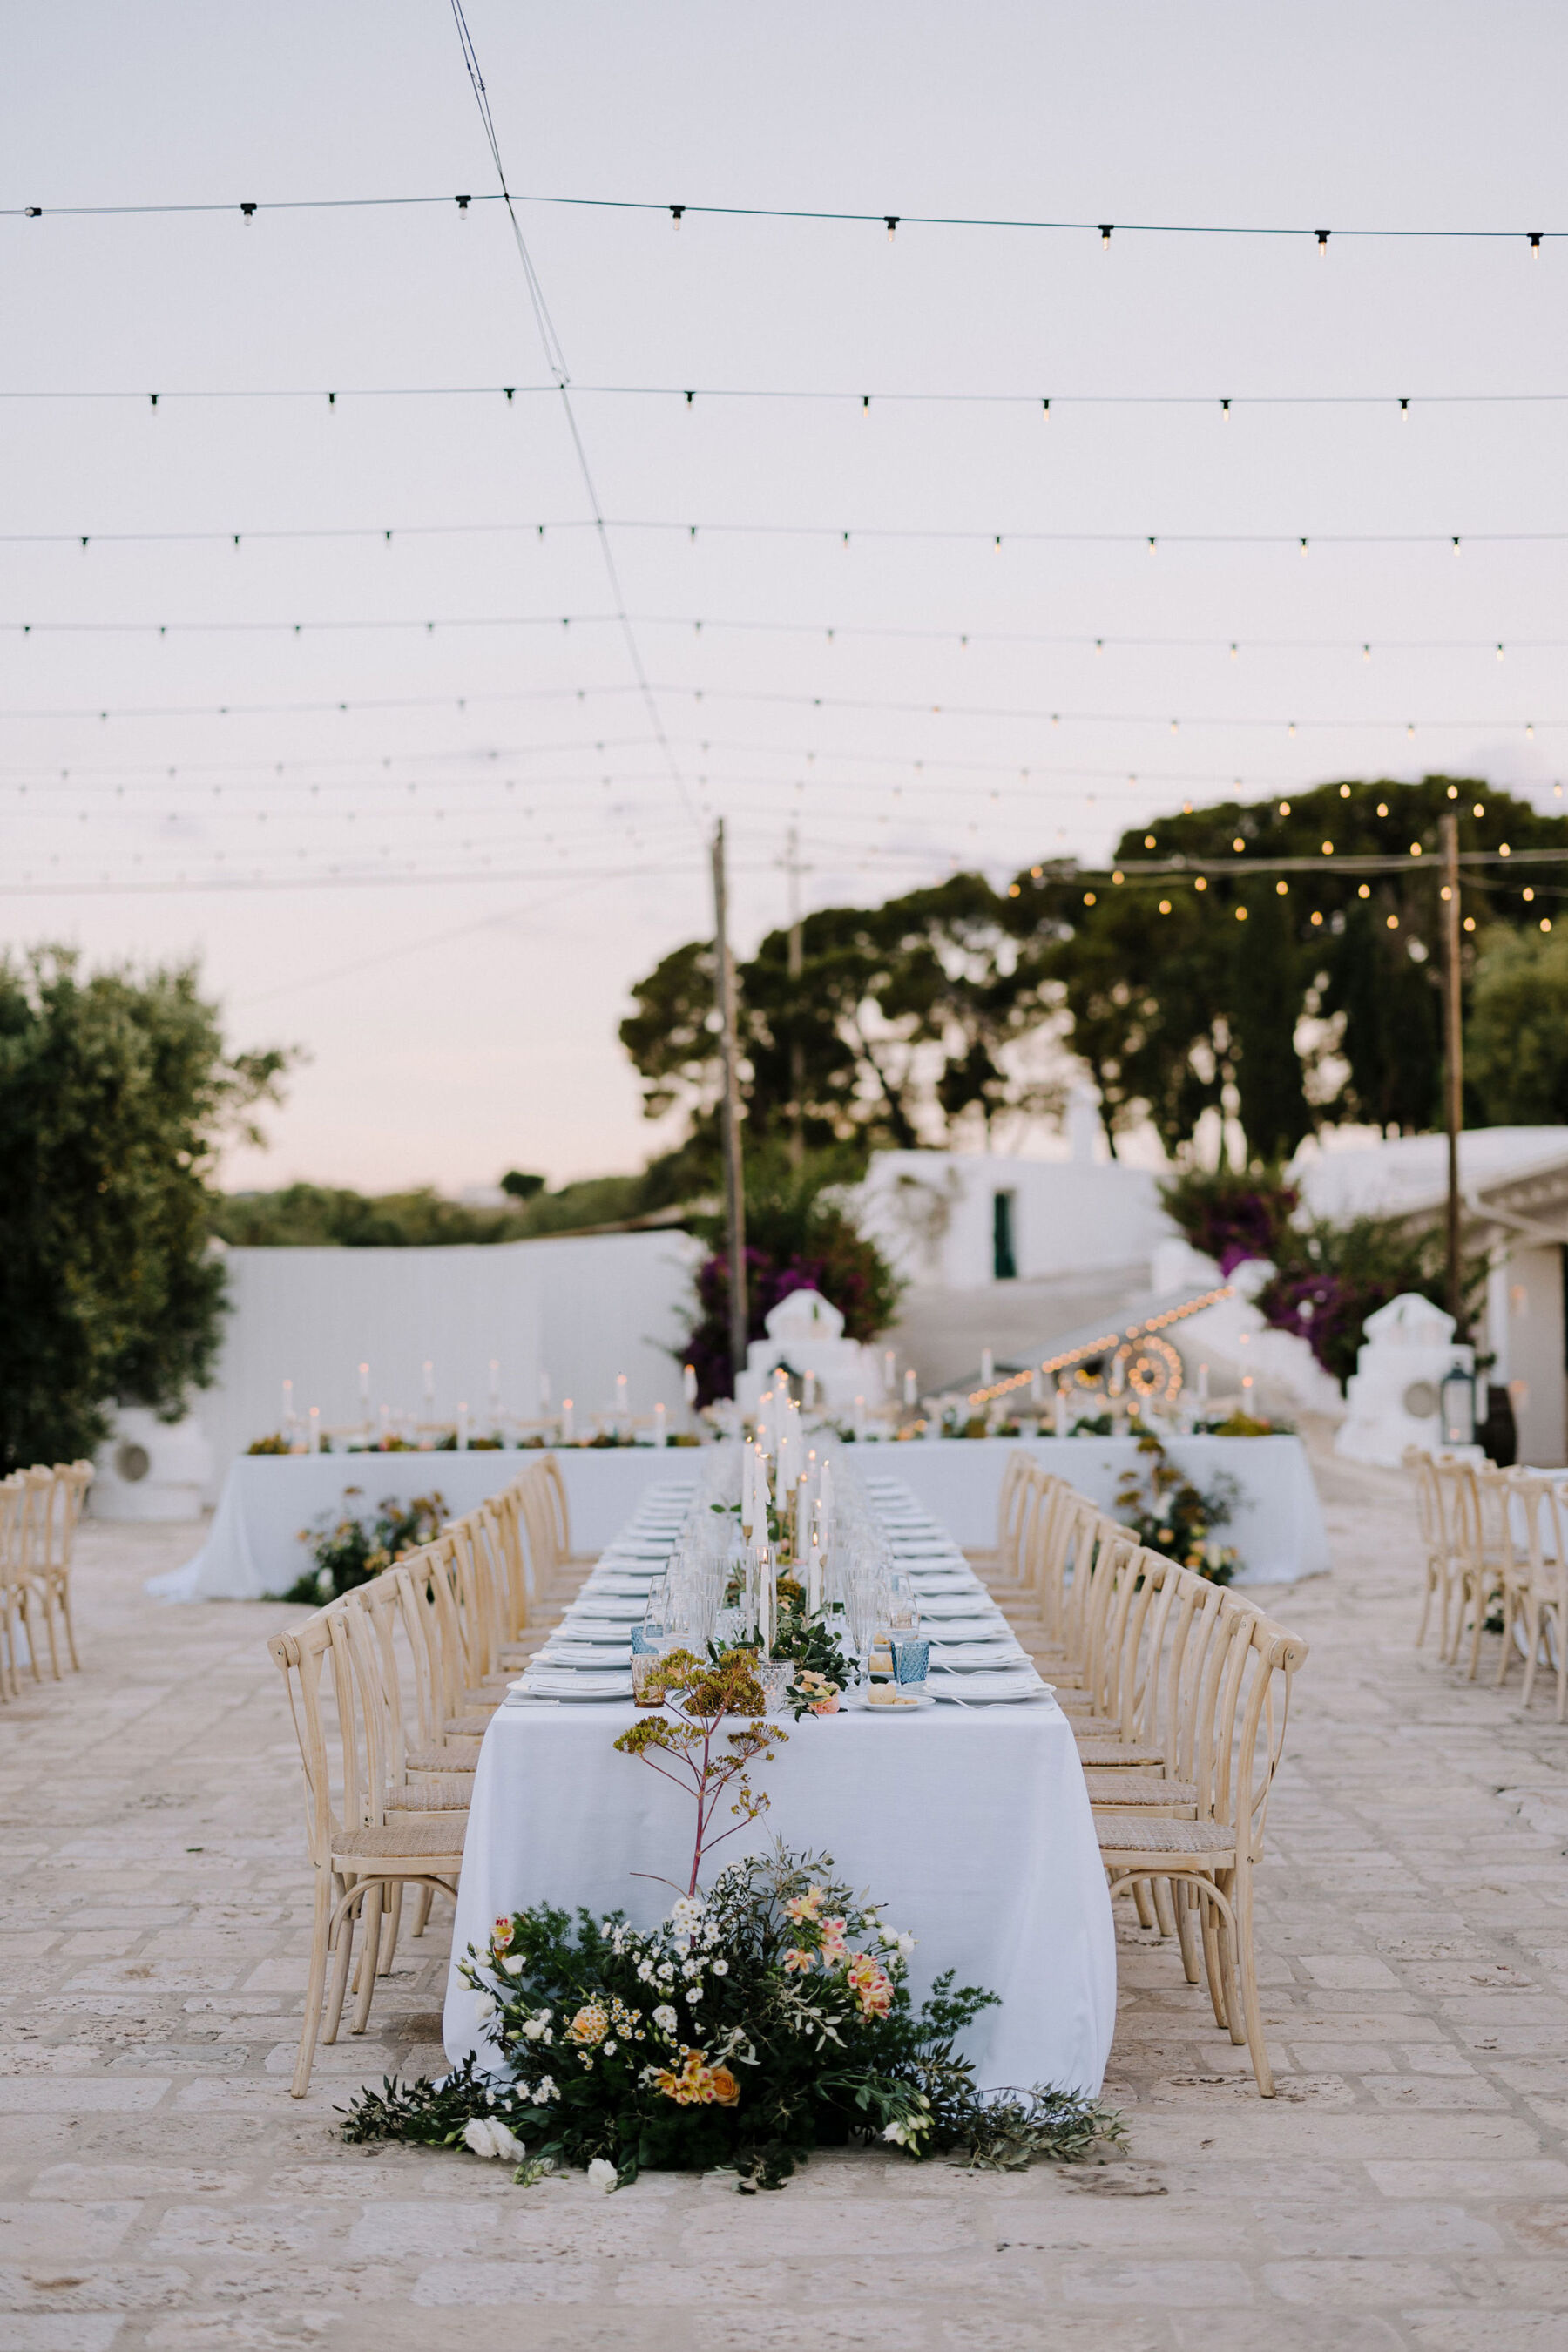 Beautiful table setting at an Italian villa wedding. Canopy of festoon lights.